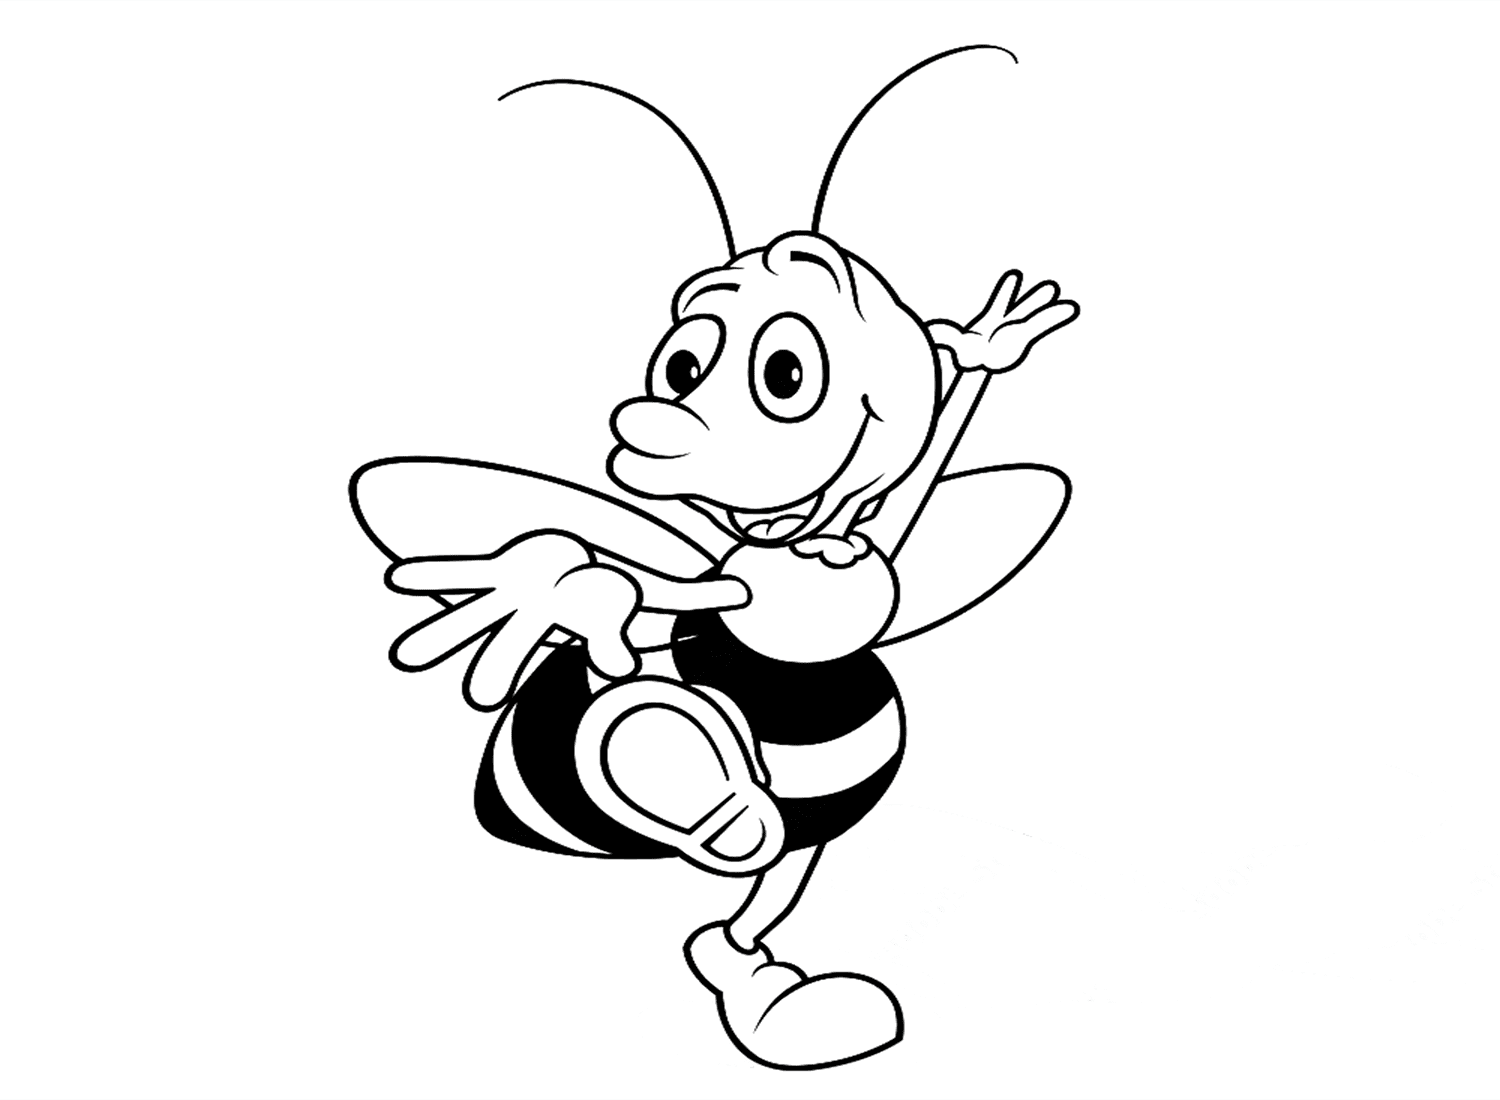 Cartoon Wasp Coloring Page from Wasp